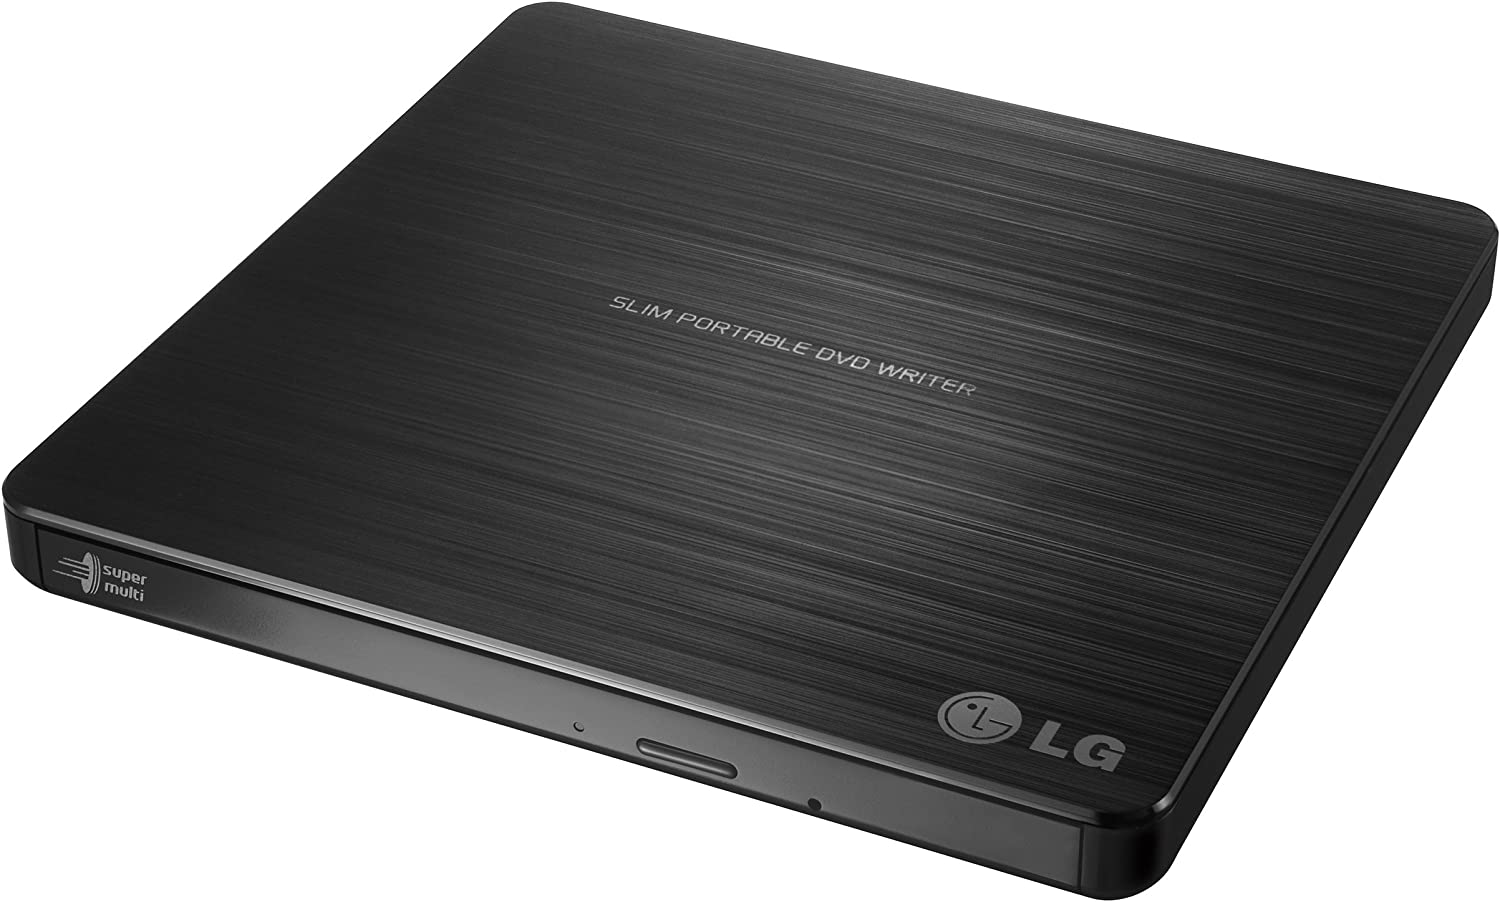 LG-External-DVD-Writer.jpg